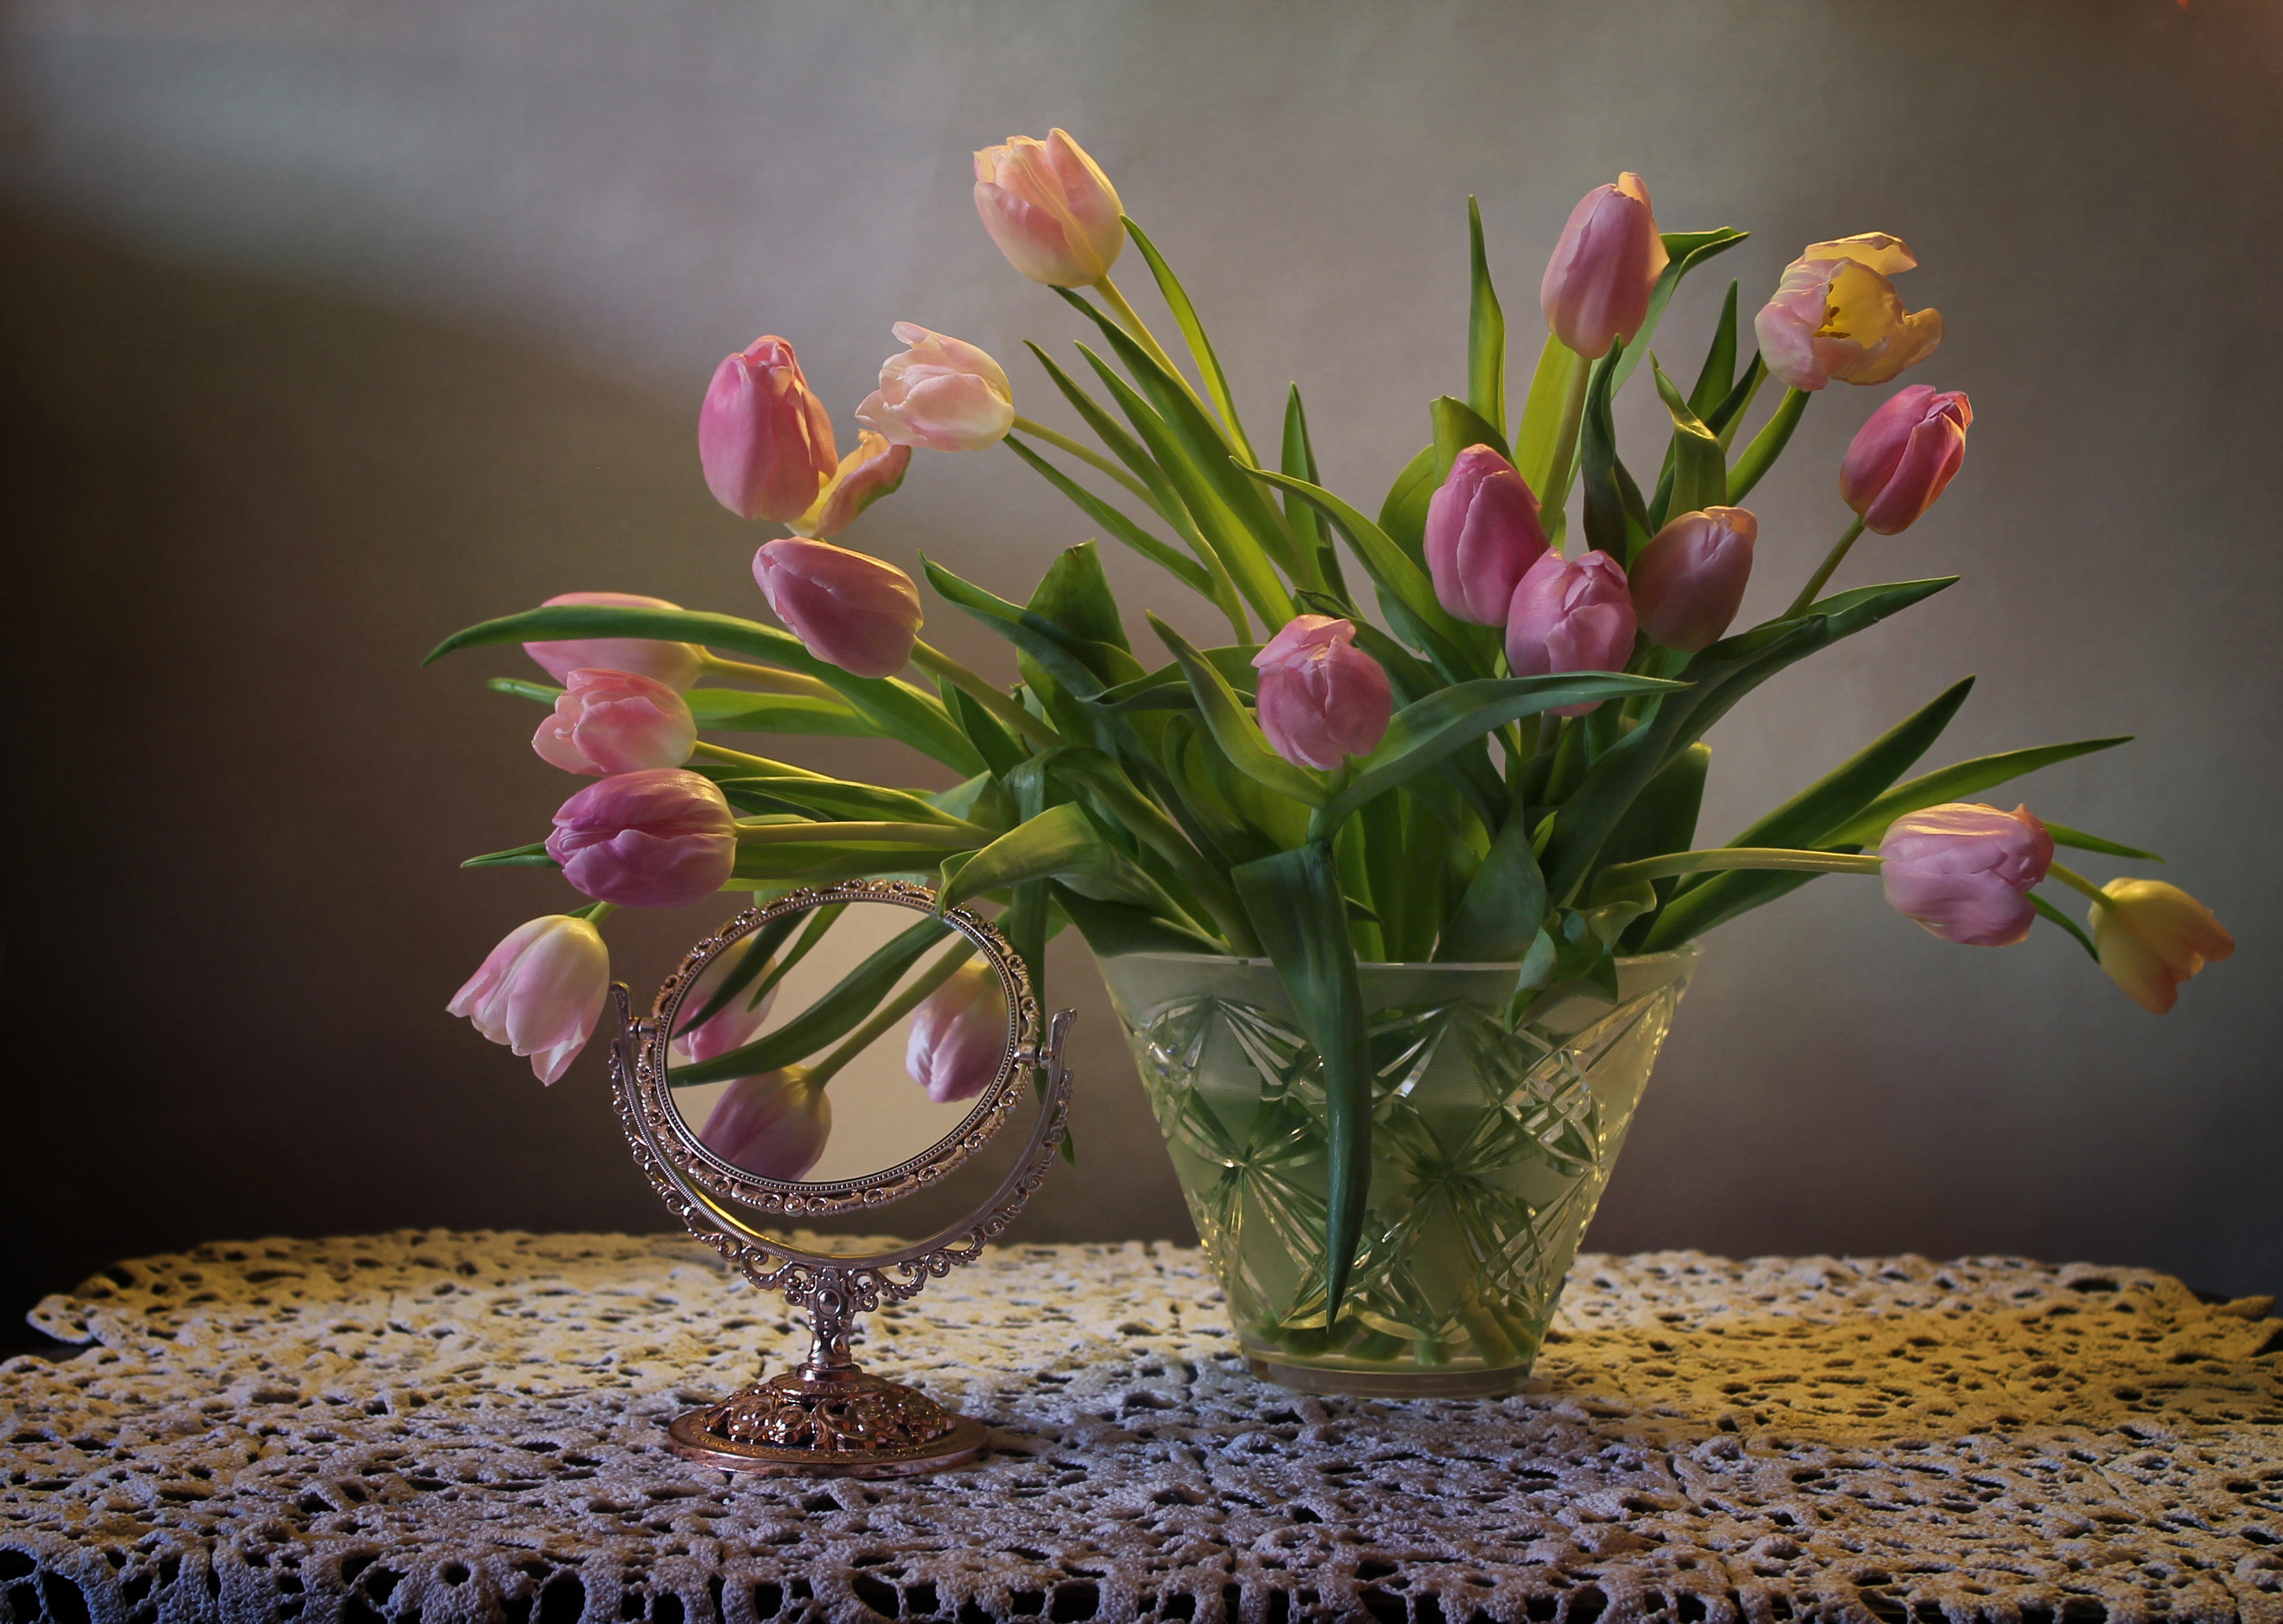 Фото тюльпаны в вазе на столе. Тюльпаны в вазе. Букет тюльпанов в вазе. Розовые тюльпаны в вазе. Красивые тюльпаны в вазе.